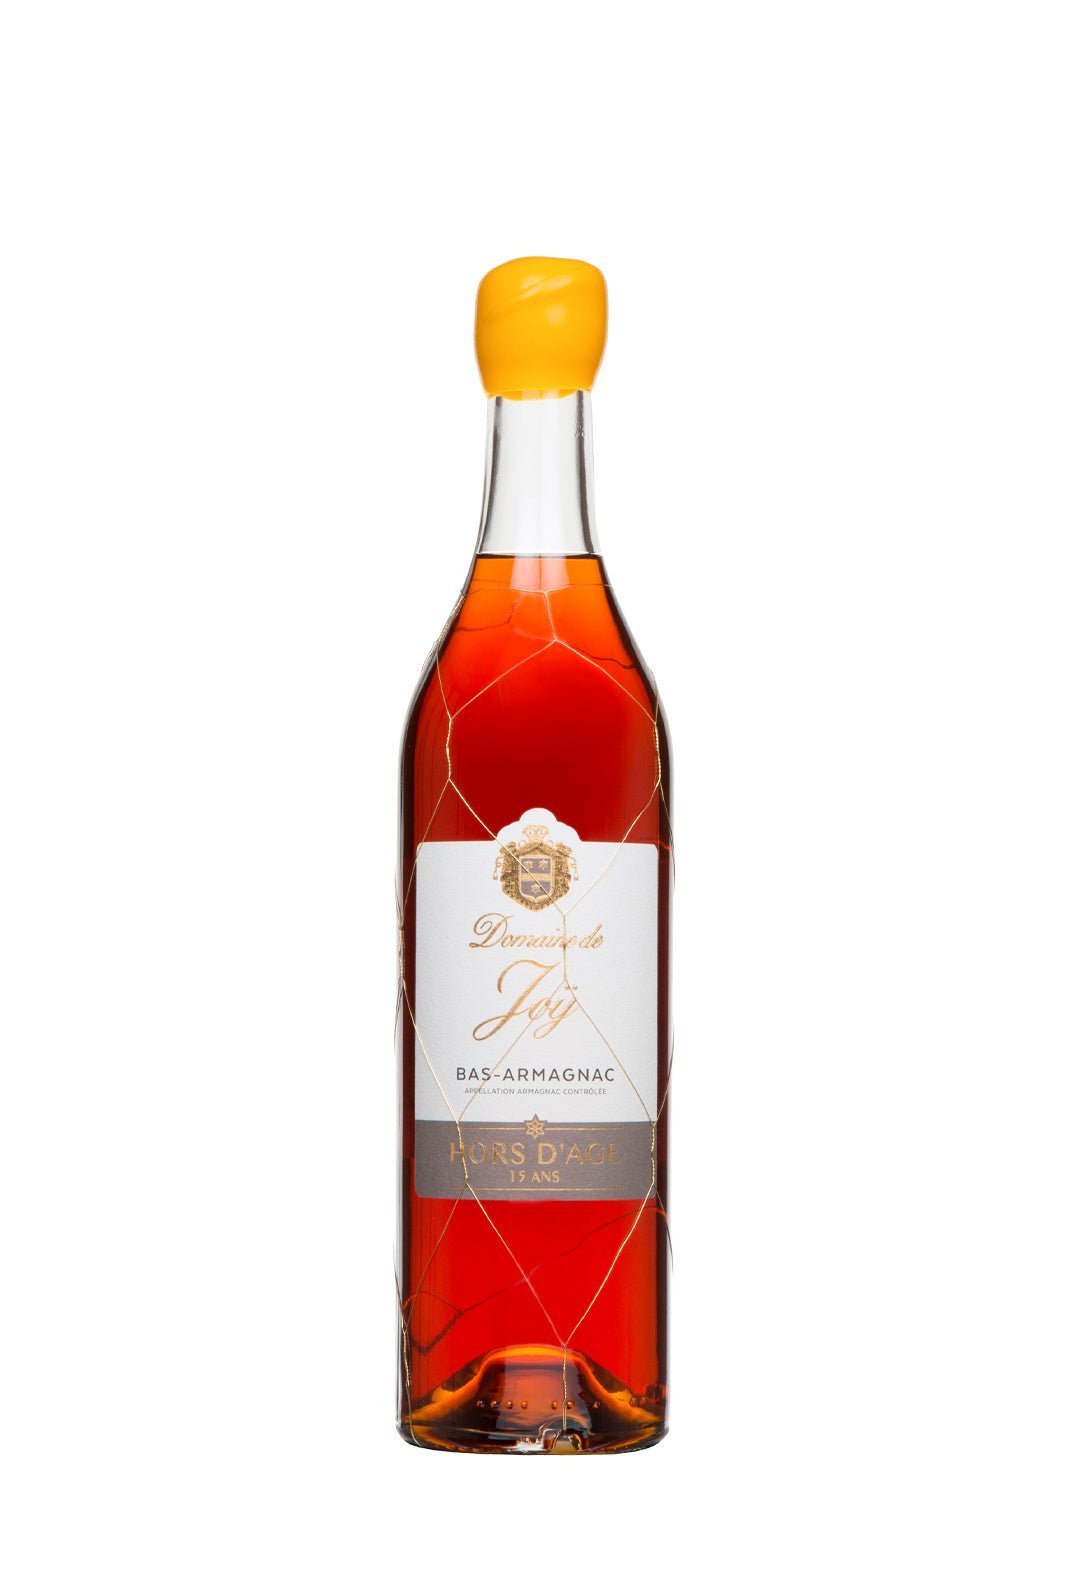 Domaine de Joy Bas Armagnac Hors d’Age 15 years 40.5% 500ml - armagnac - Liquor Wine Cave